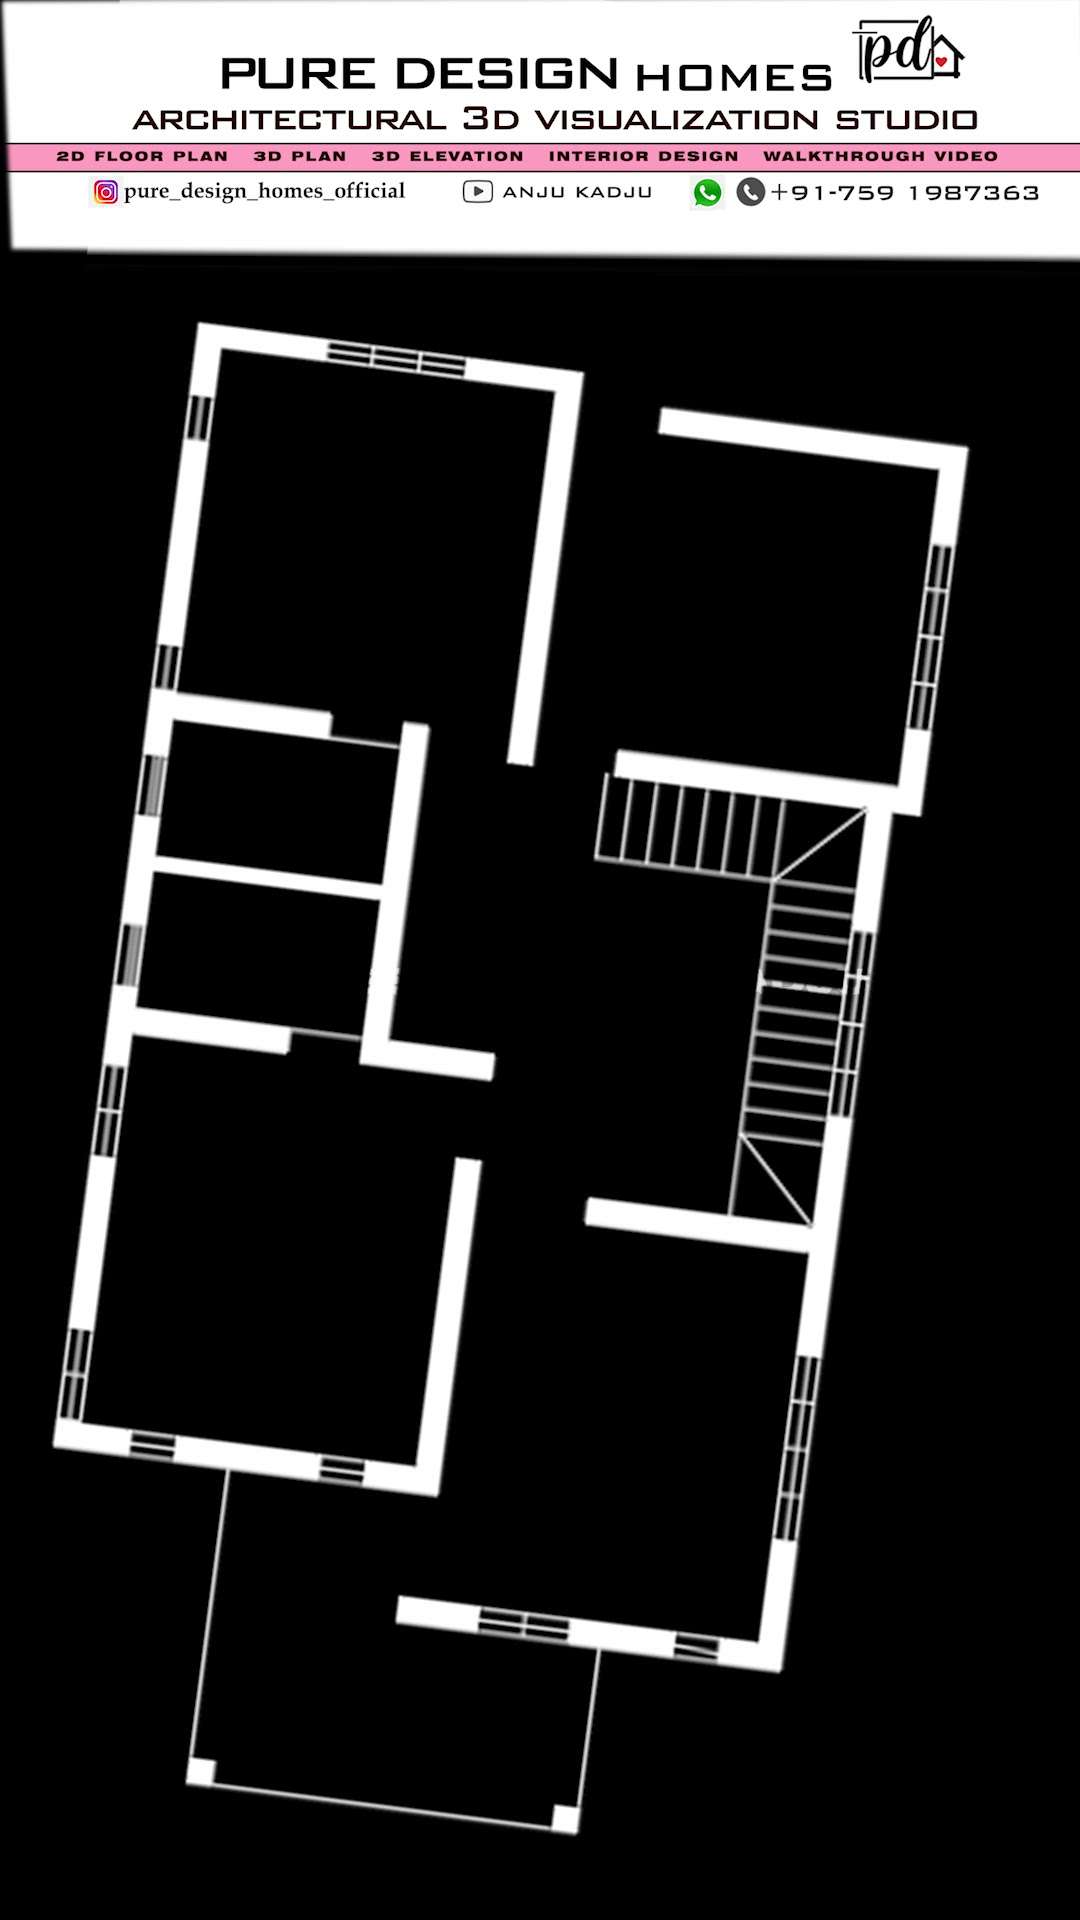 Budget friendly interior concept
3d floor plan / 3d plan / 2bhk / budget plan
Designed by anju kadju
+917591987363
3d floor plan / interior top view / 3d plan
നിങ്ങളുടെ വീടും ഇതുപോലെ ദൃശ്യവത്കരിച്ചു ലഭിക്കാൻ ഞങ്ങളുമായി ബന്ധപെടു.
Anju kadju
+917591987363 (WhatsApp only🙏🏻)
Architectural 3d designer
#3dfloorplan #interiortopview #interiordesigner #3dplan #online3ddesigner